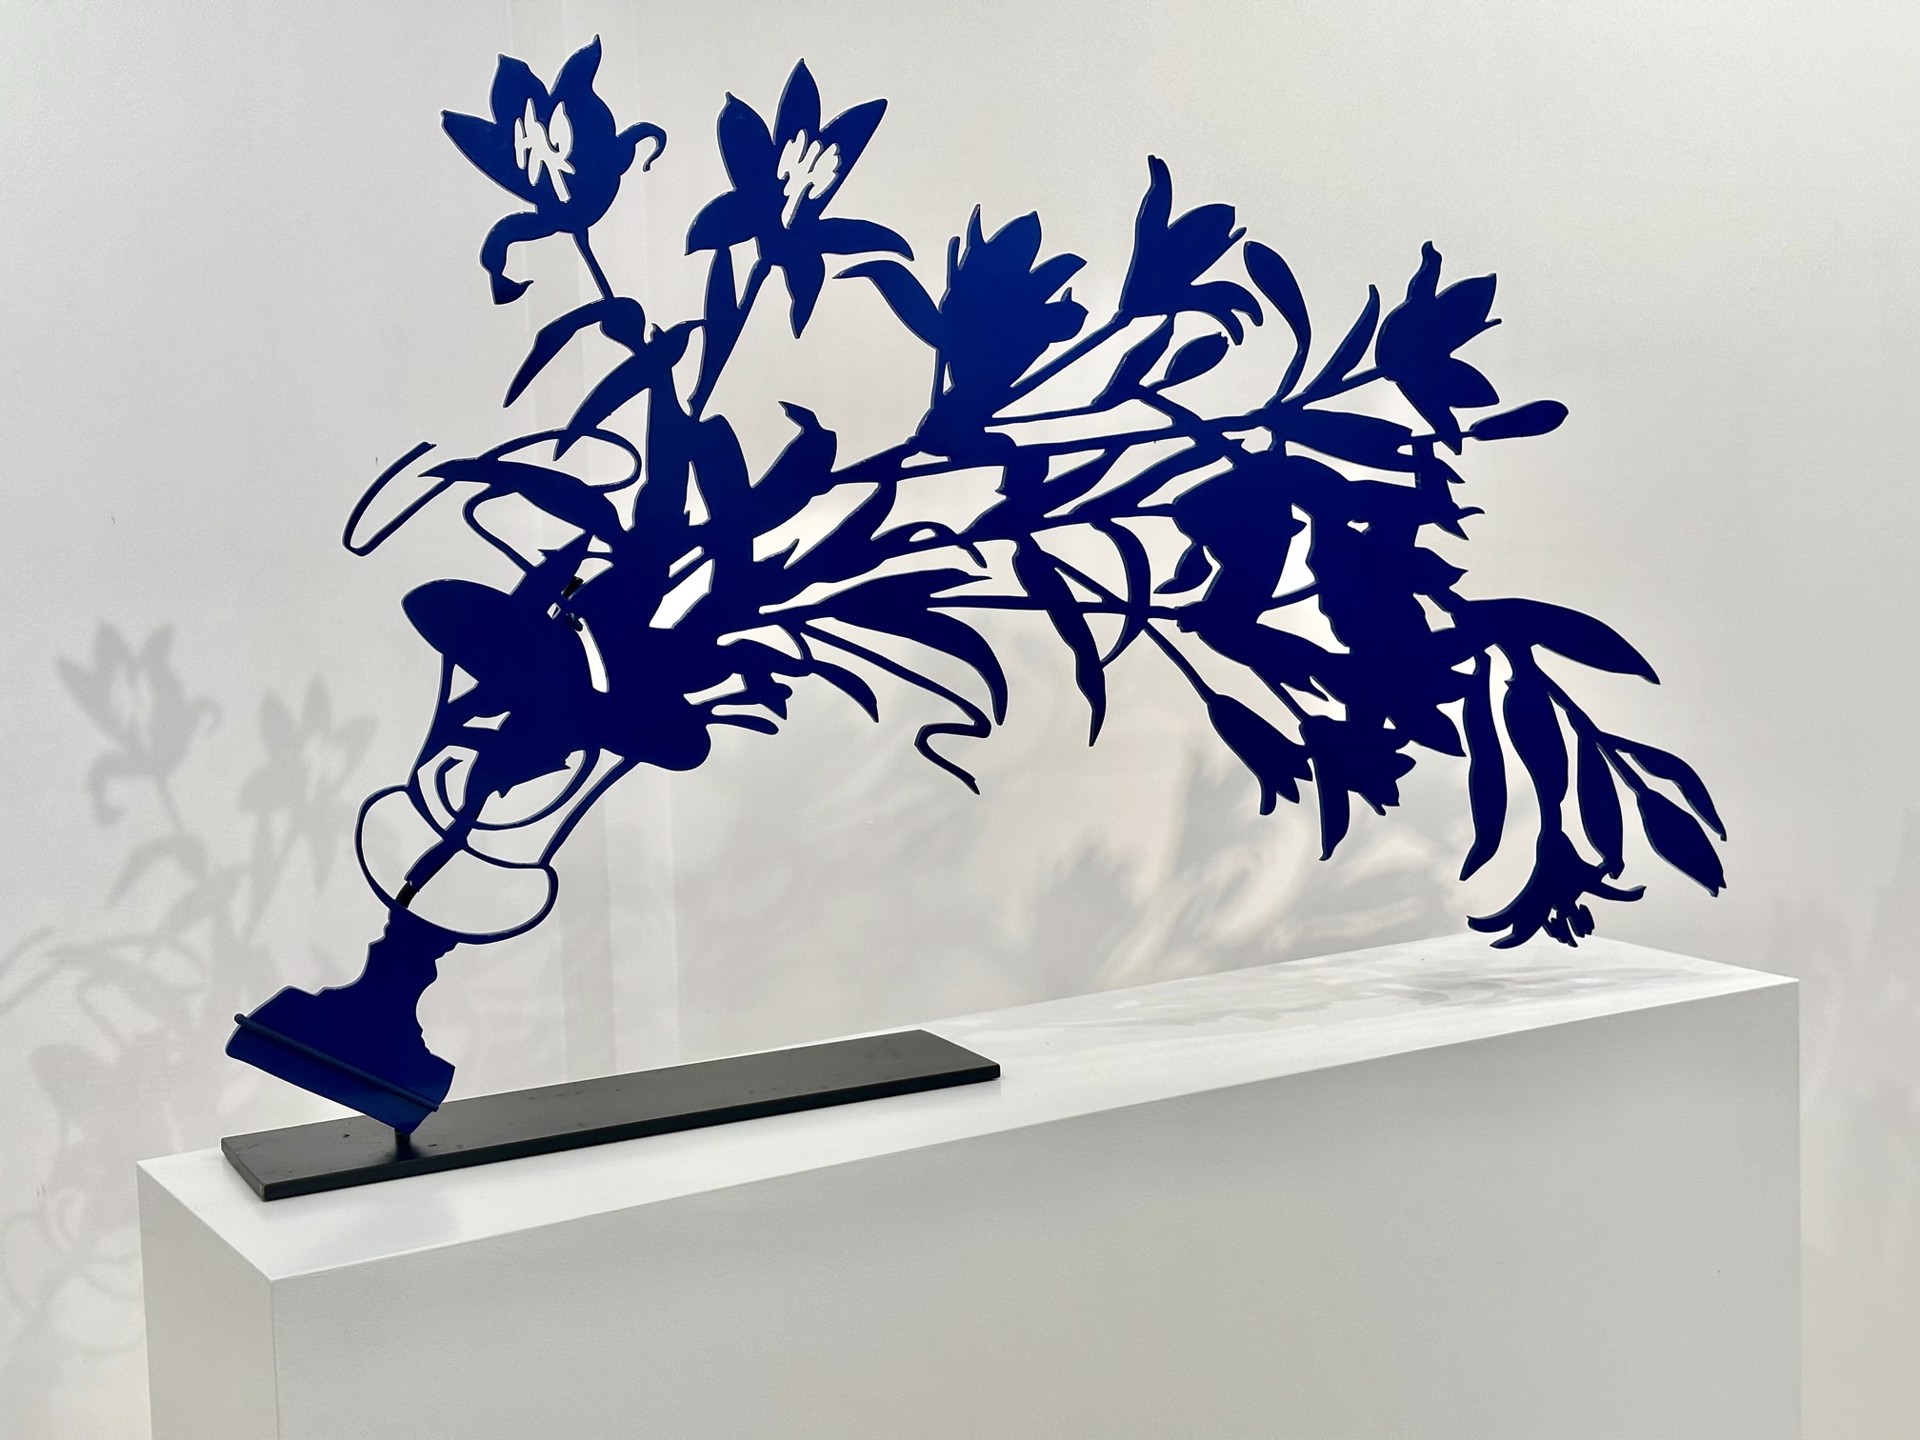 Urn with Flying Lilies in Blue - indoor or garden sculpture by Gary Bukovnik